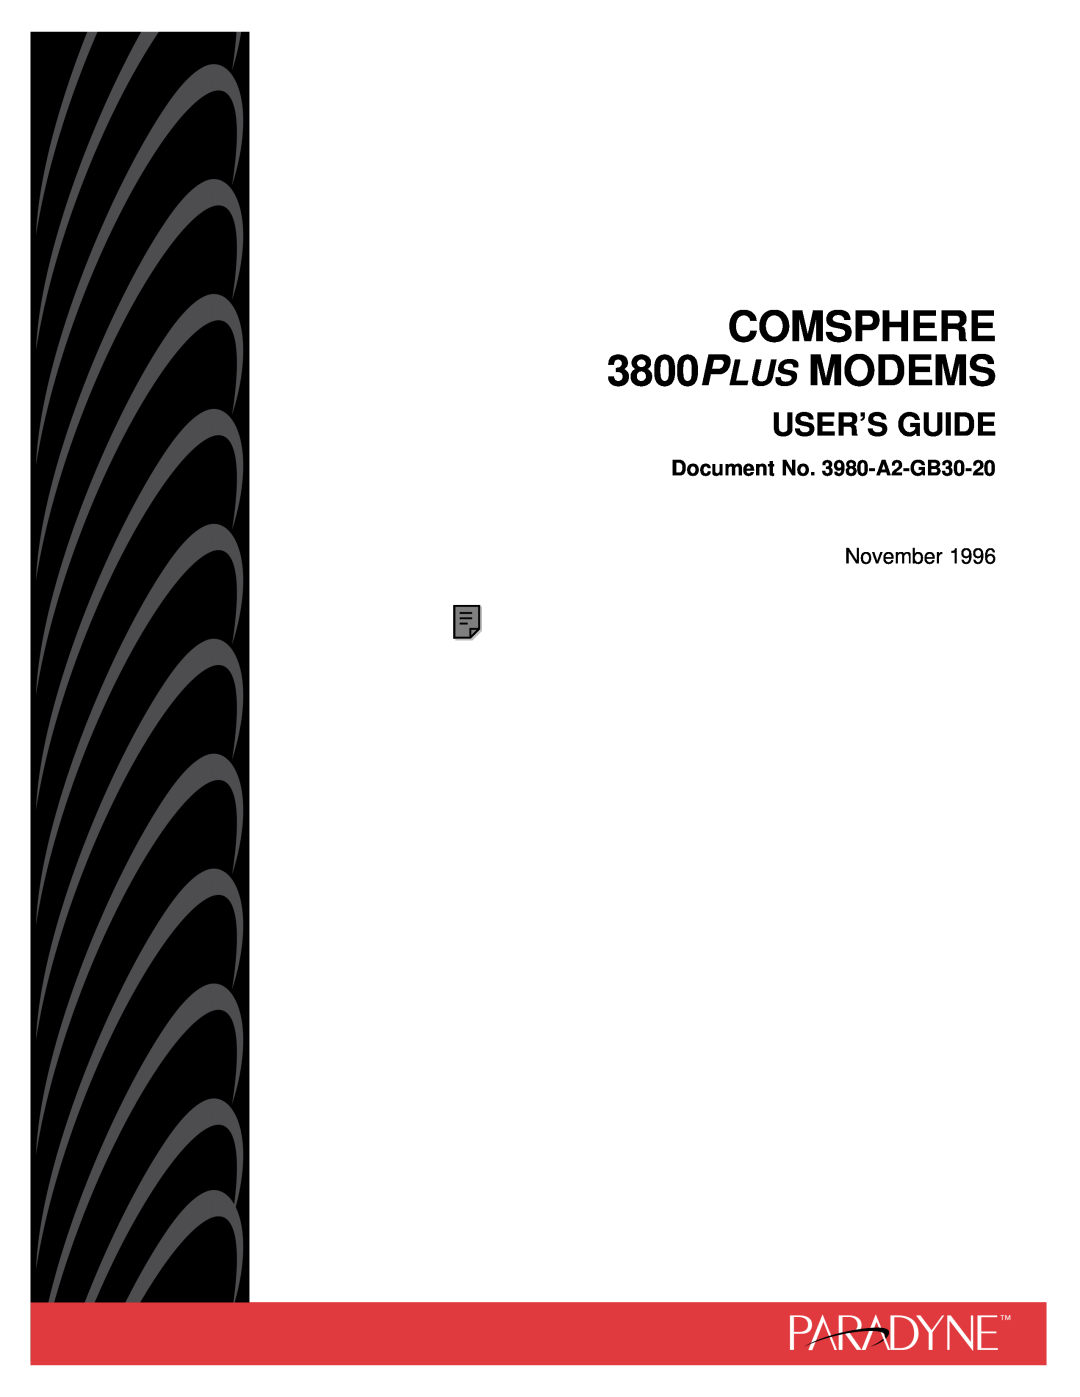 Paradyne manual Users Guide, Document No. 3980-A2-GB30-20, COMSPHERE 3800PLUS MODEMS, November 